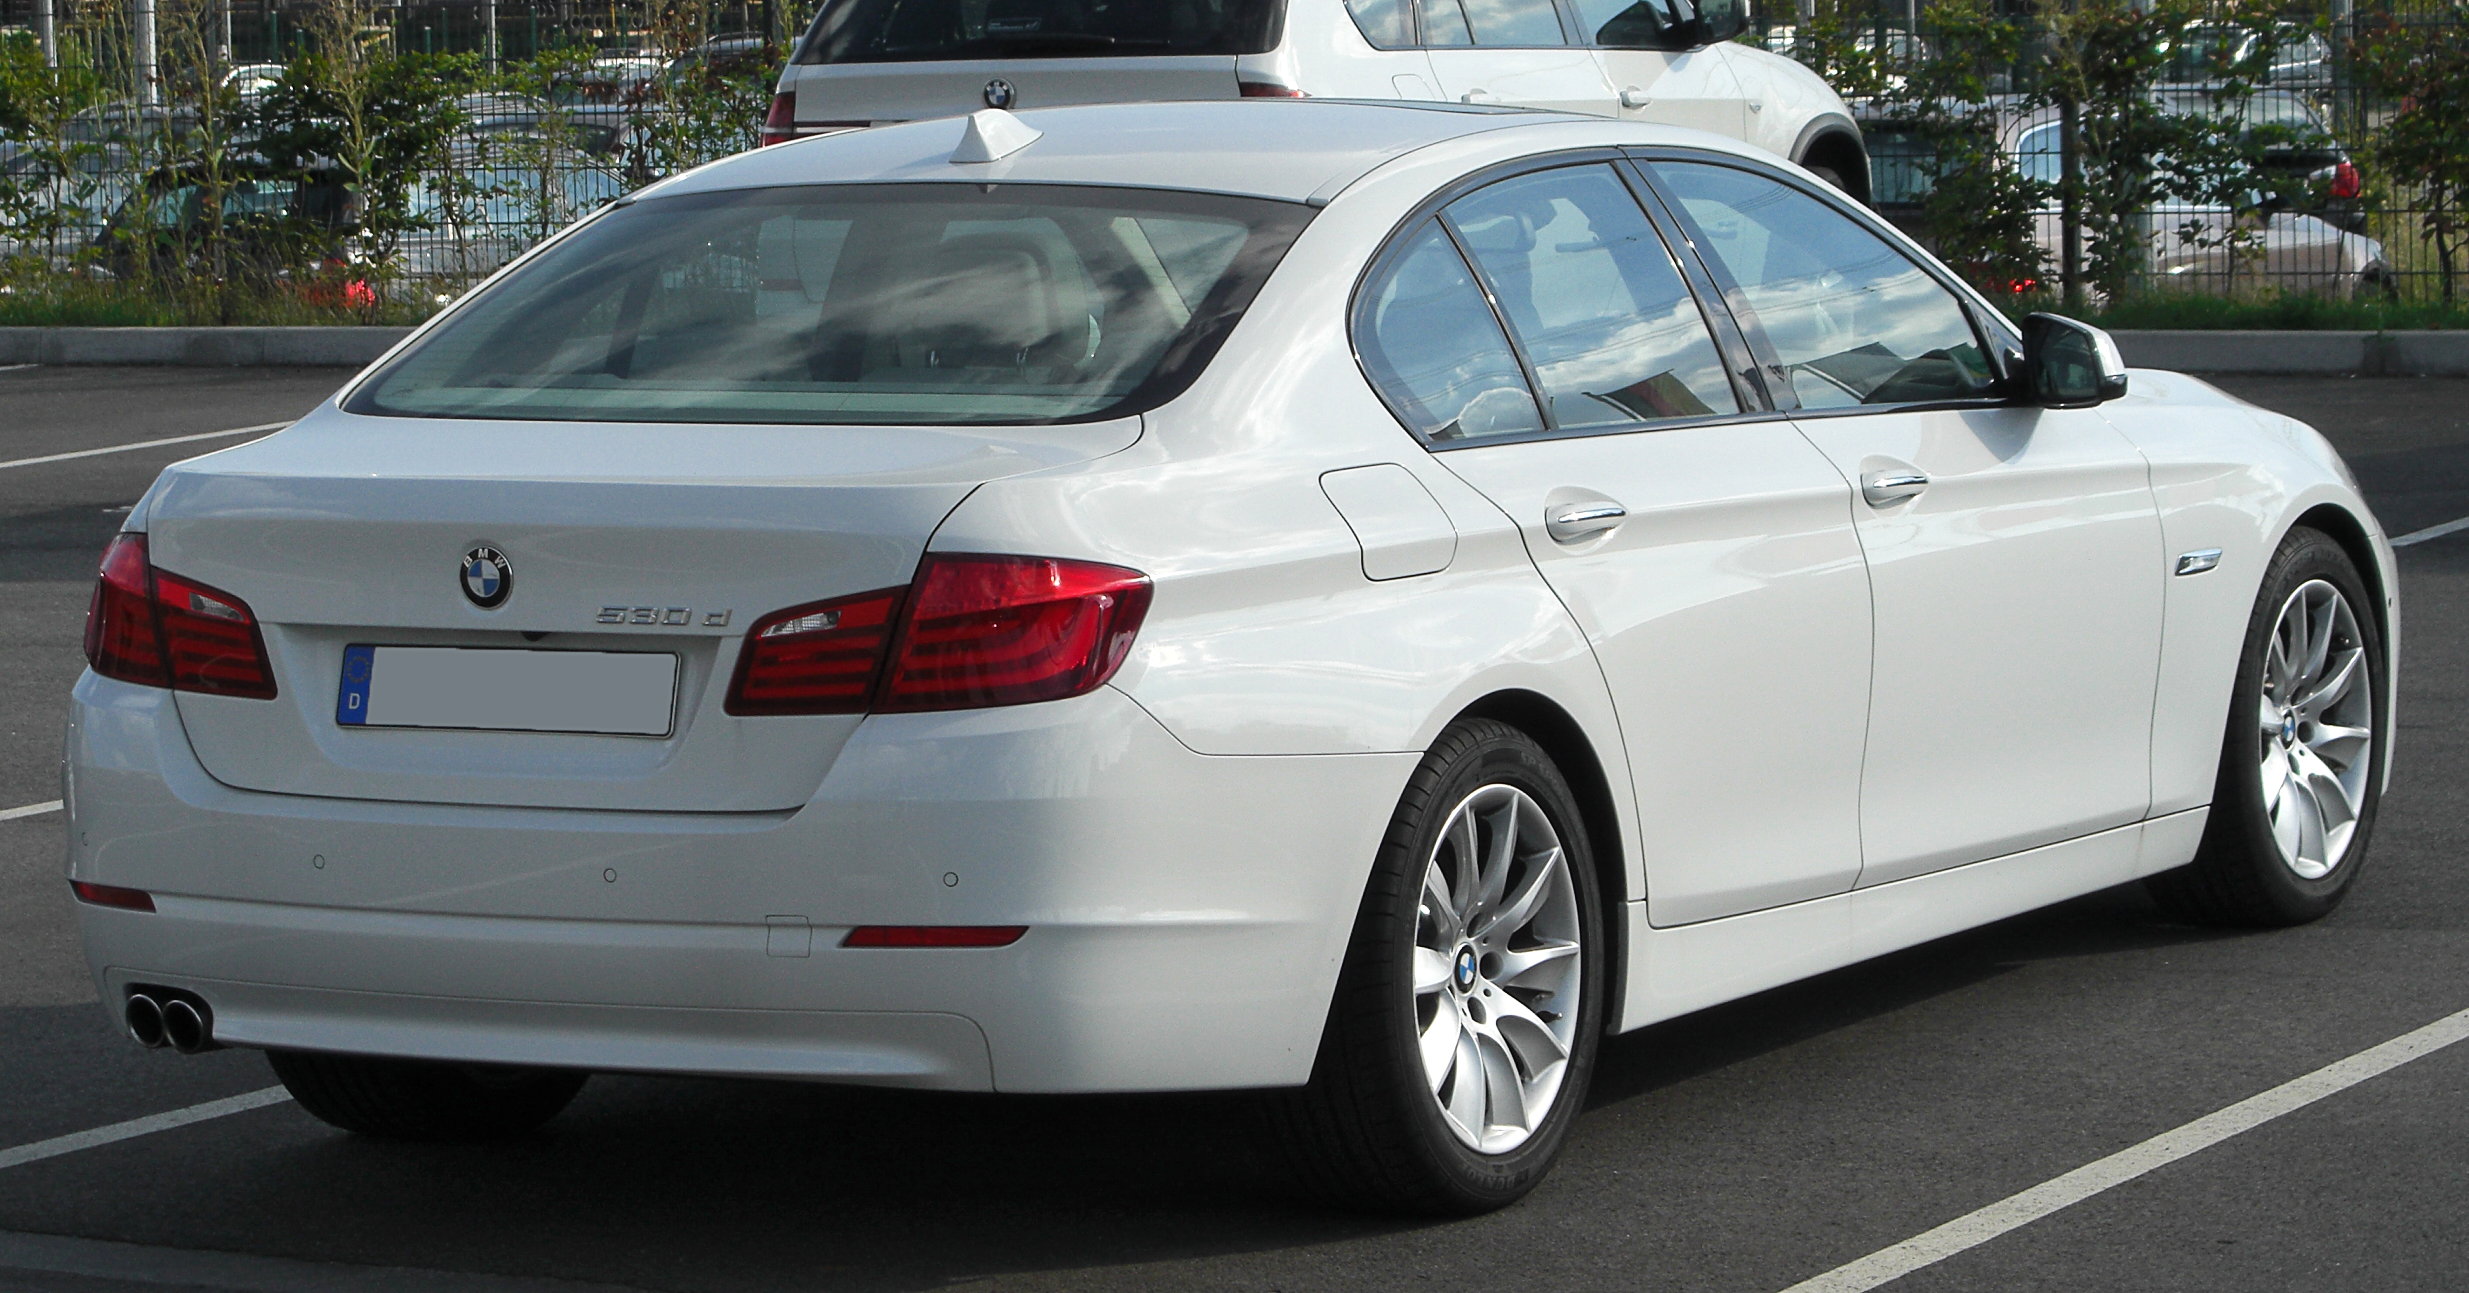 Dossier: BMW 530d (F10) arrière - 1 20100821.jpg